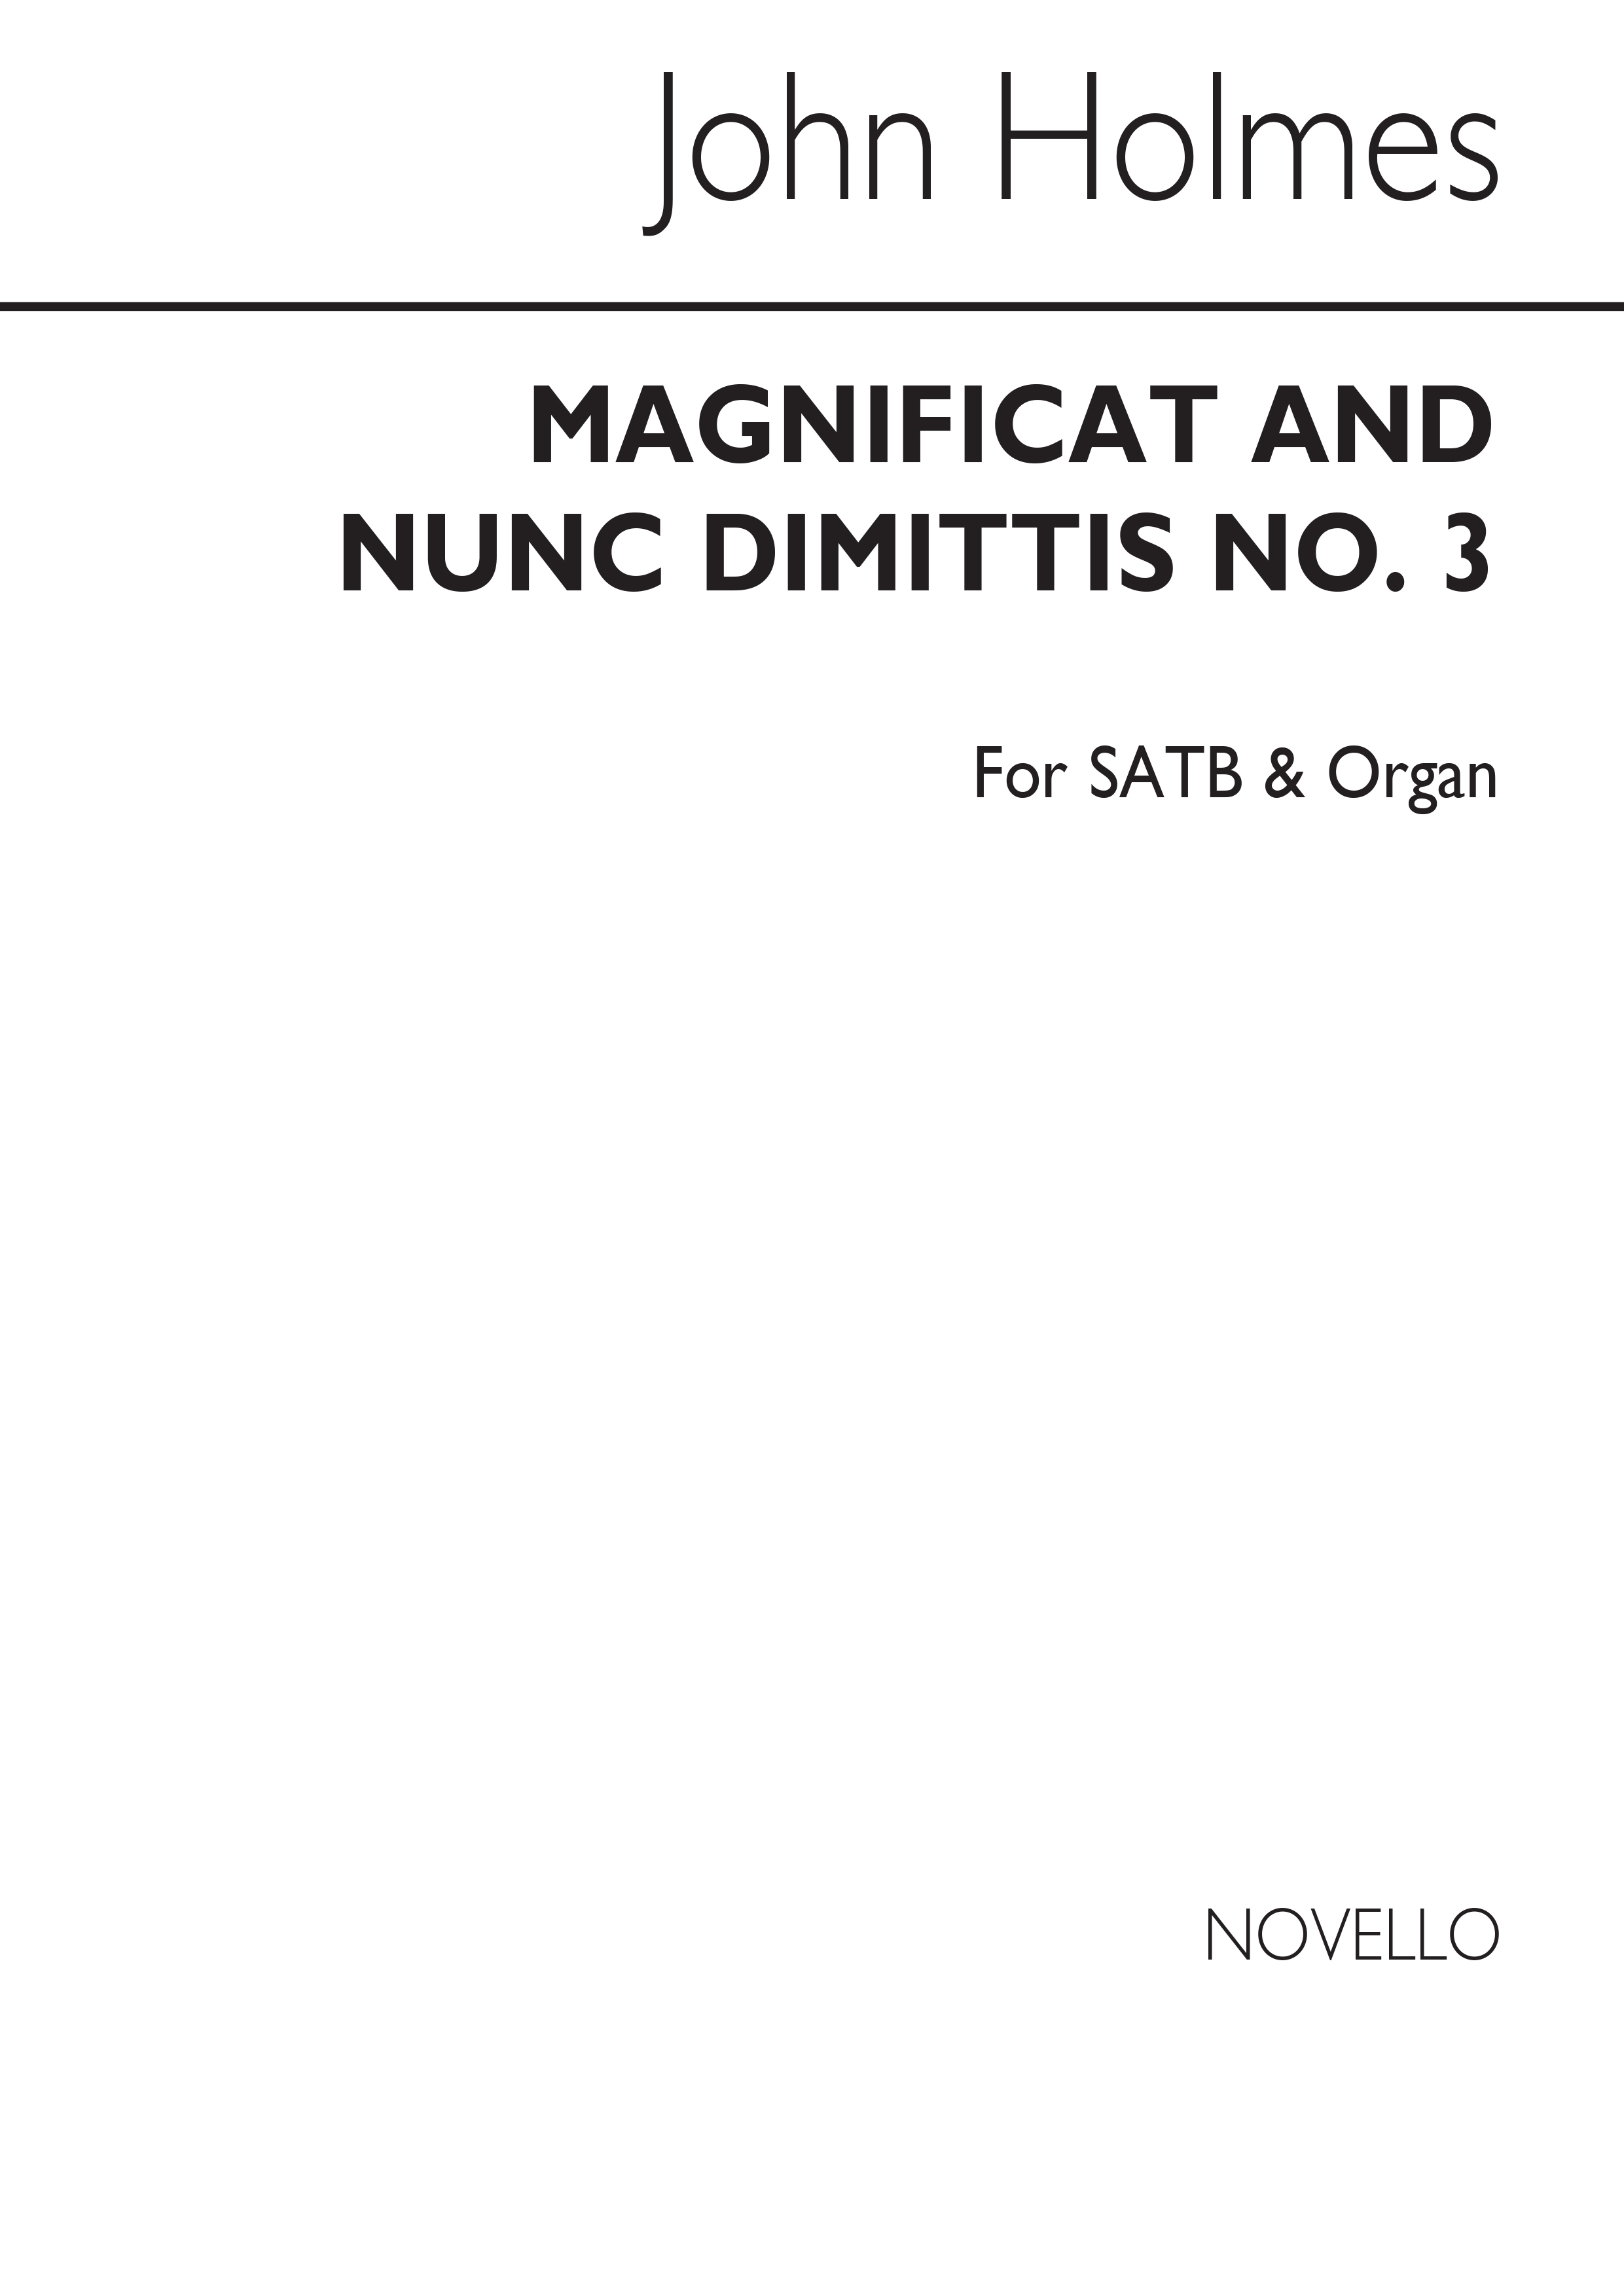 Holmes Magnificat And Nunc Dimittis (Pcb 890)